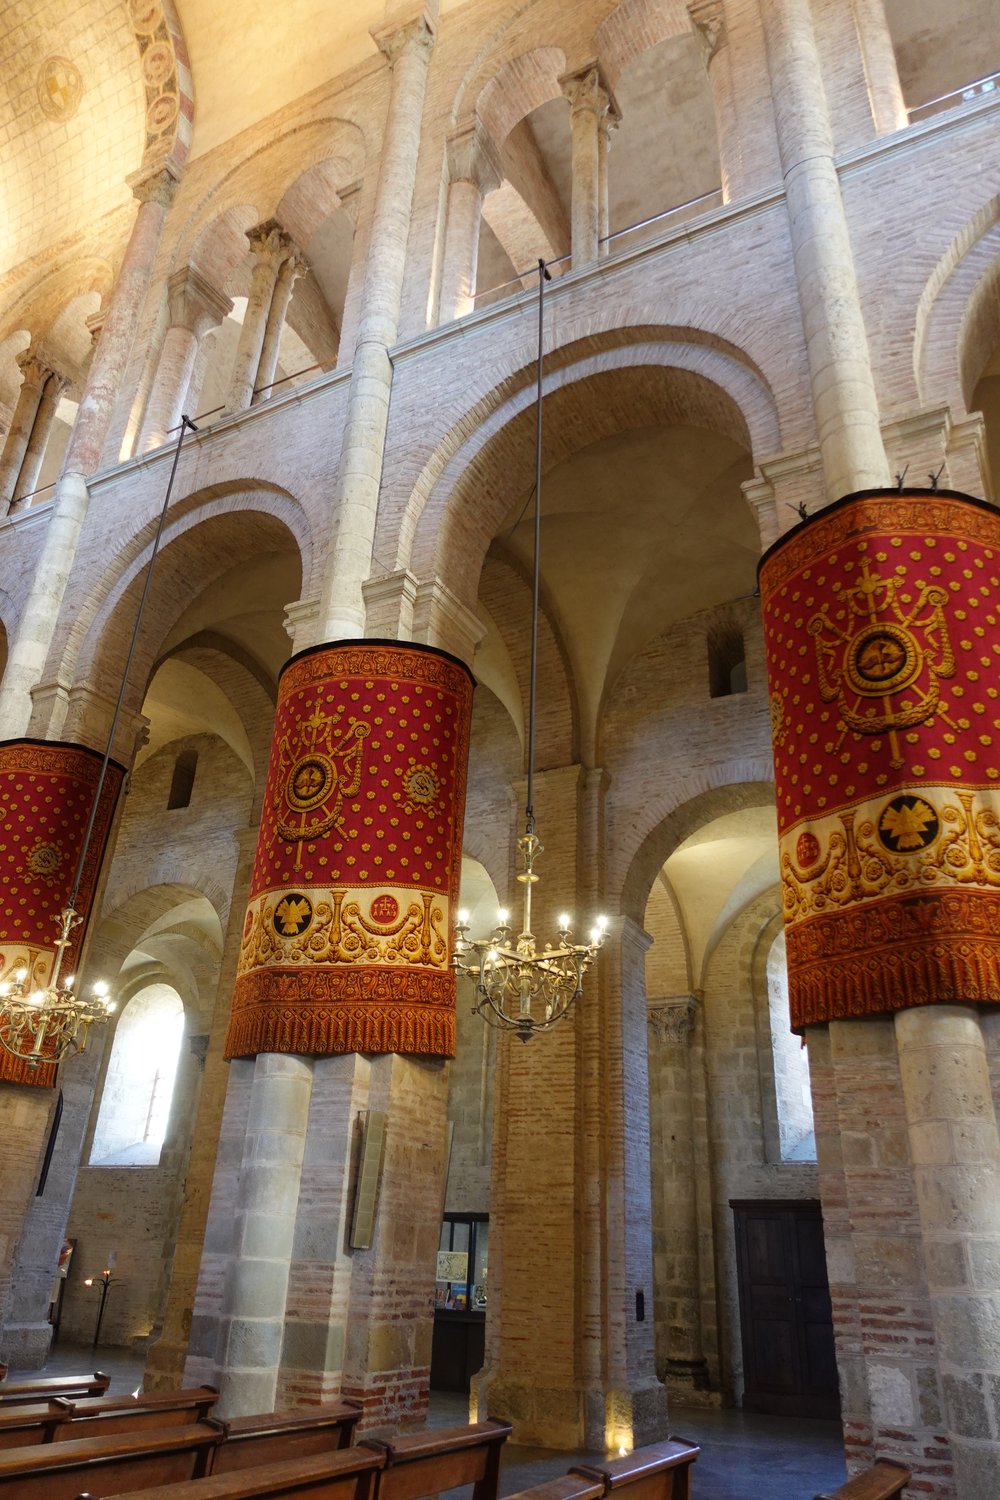 Stone Arches and Pillars, Basilica de Saint Sernin, Toulouse, France